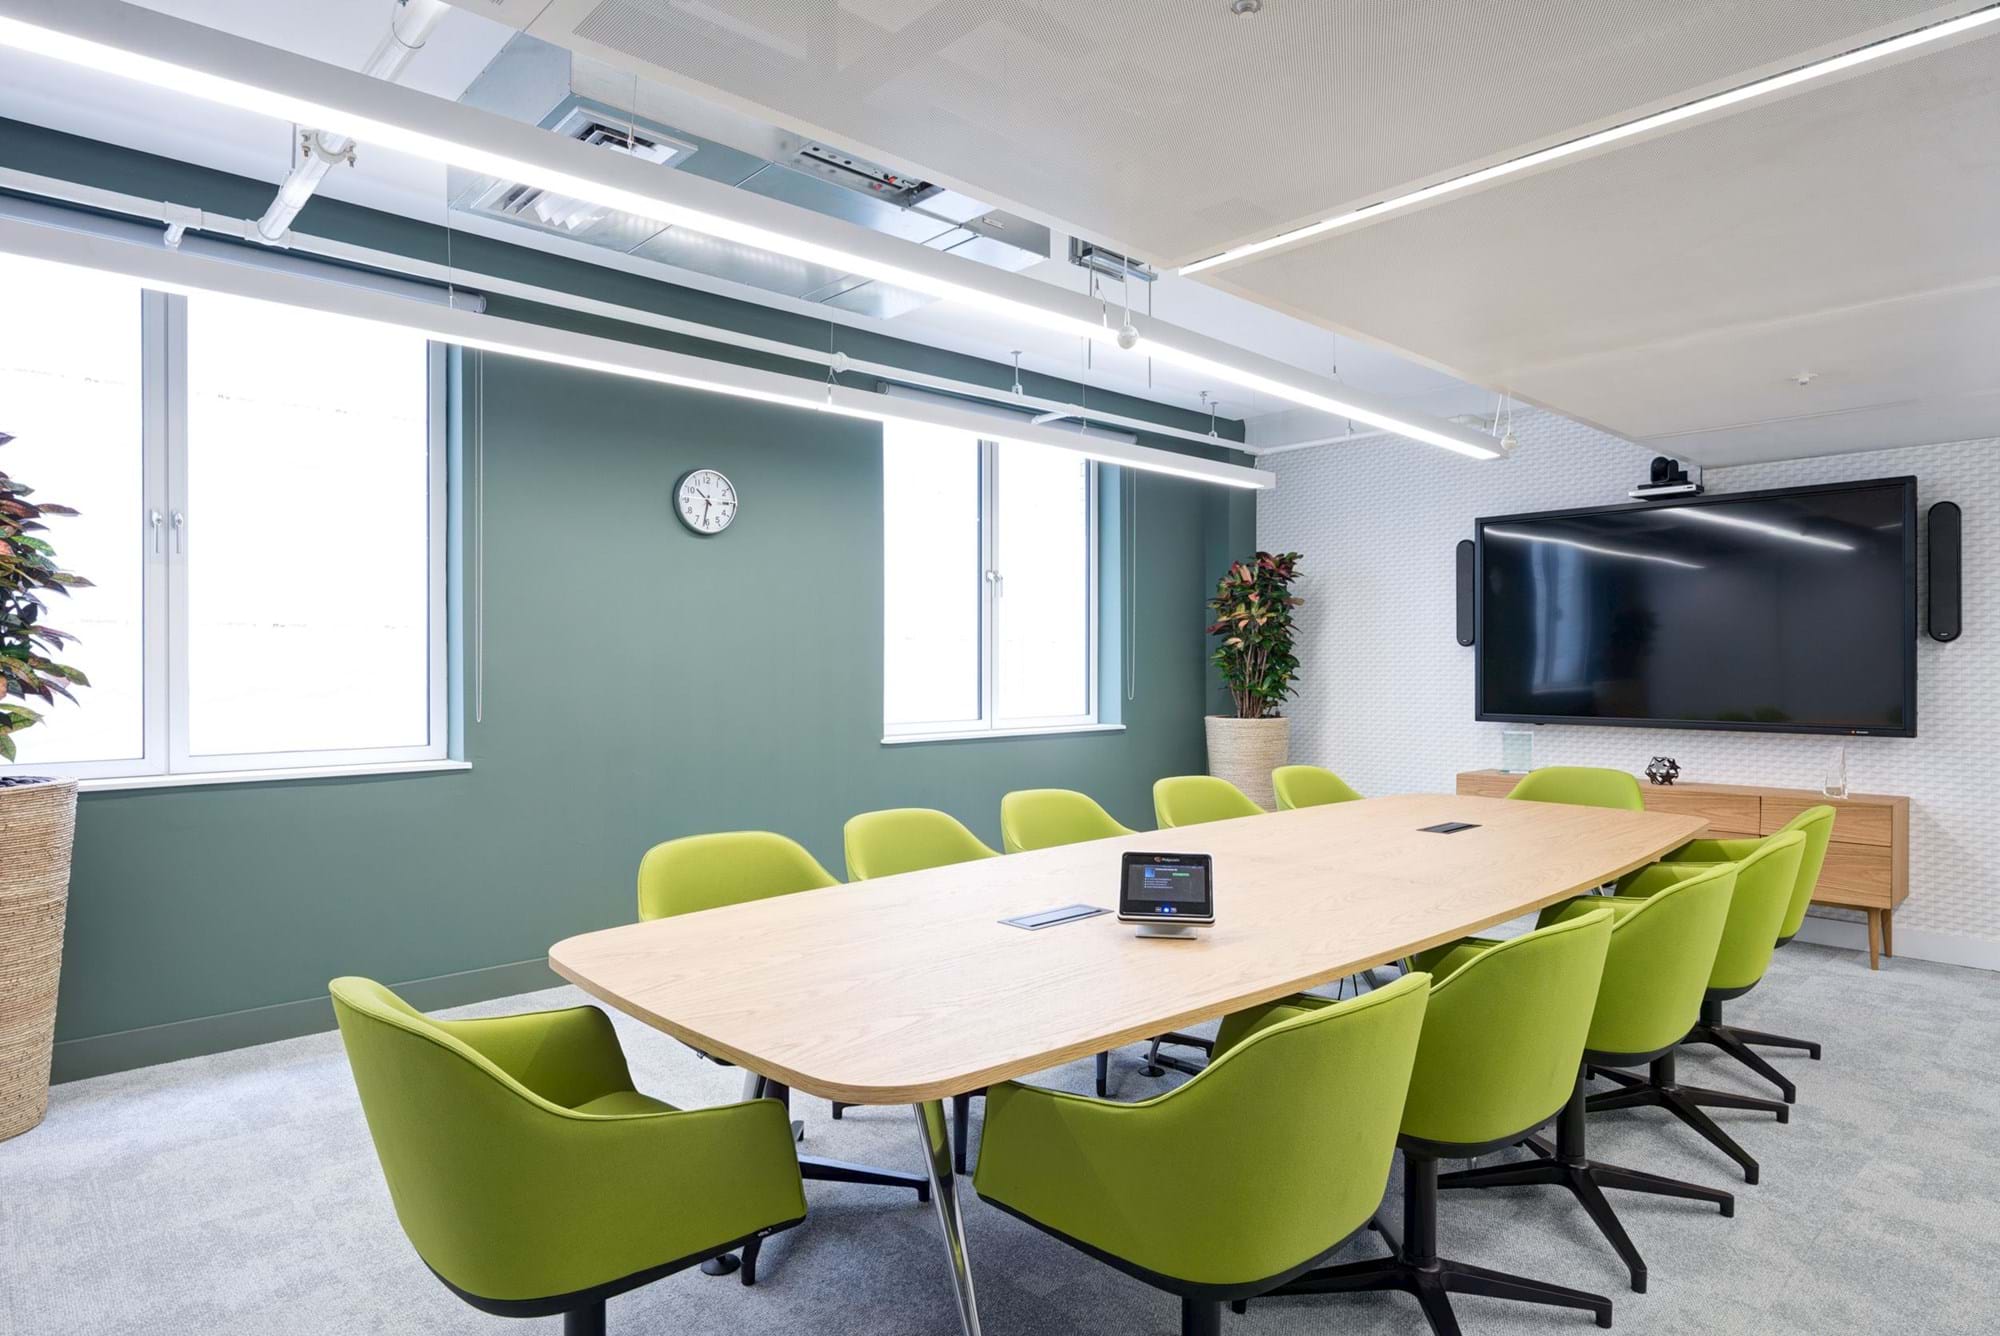 Modus Workspace office design, fit out and refurbishment - Mendeley - Mendeley 08 highres sRGB.jpg